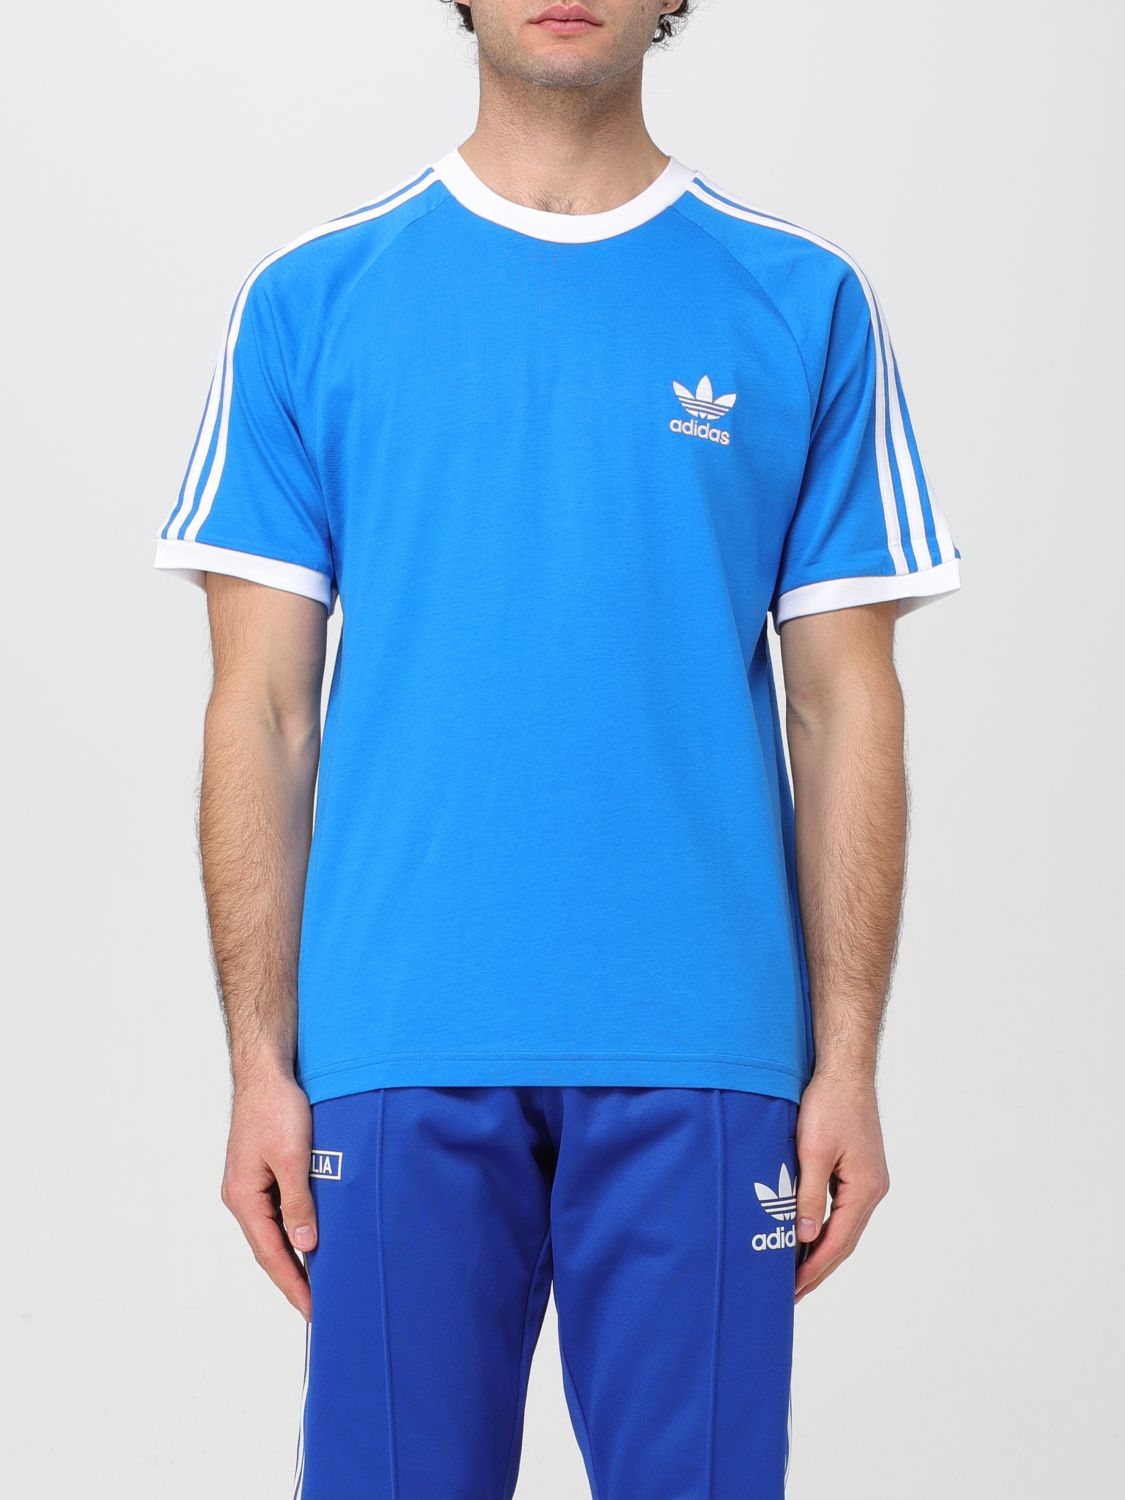 Adidas Originals T-shirt  Herren Farbe Hellblau In Gnawed Blue